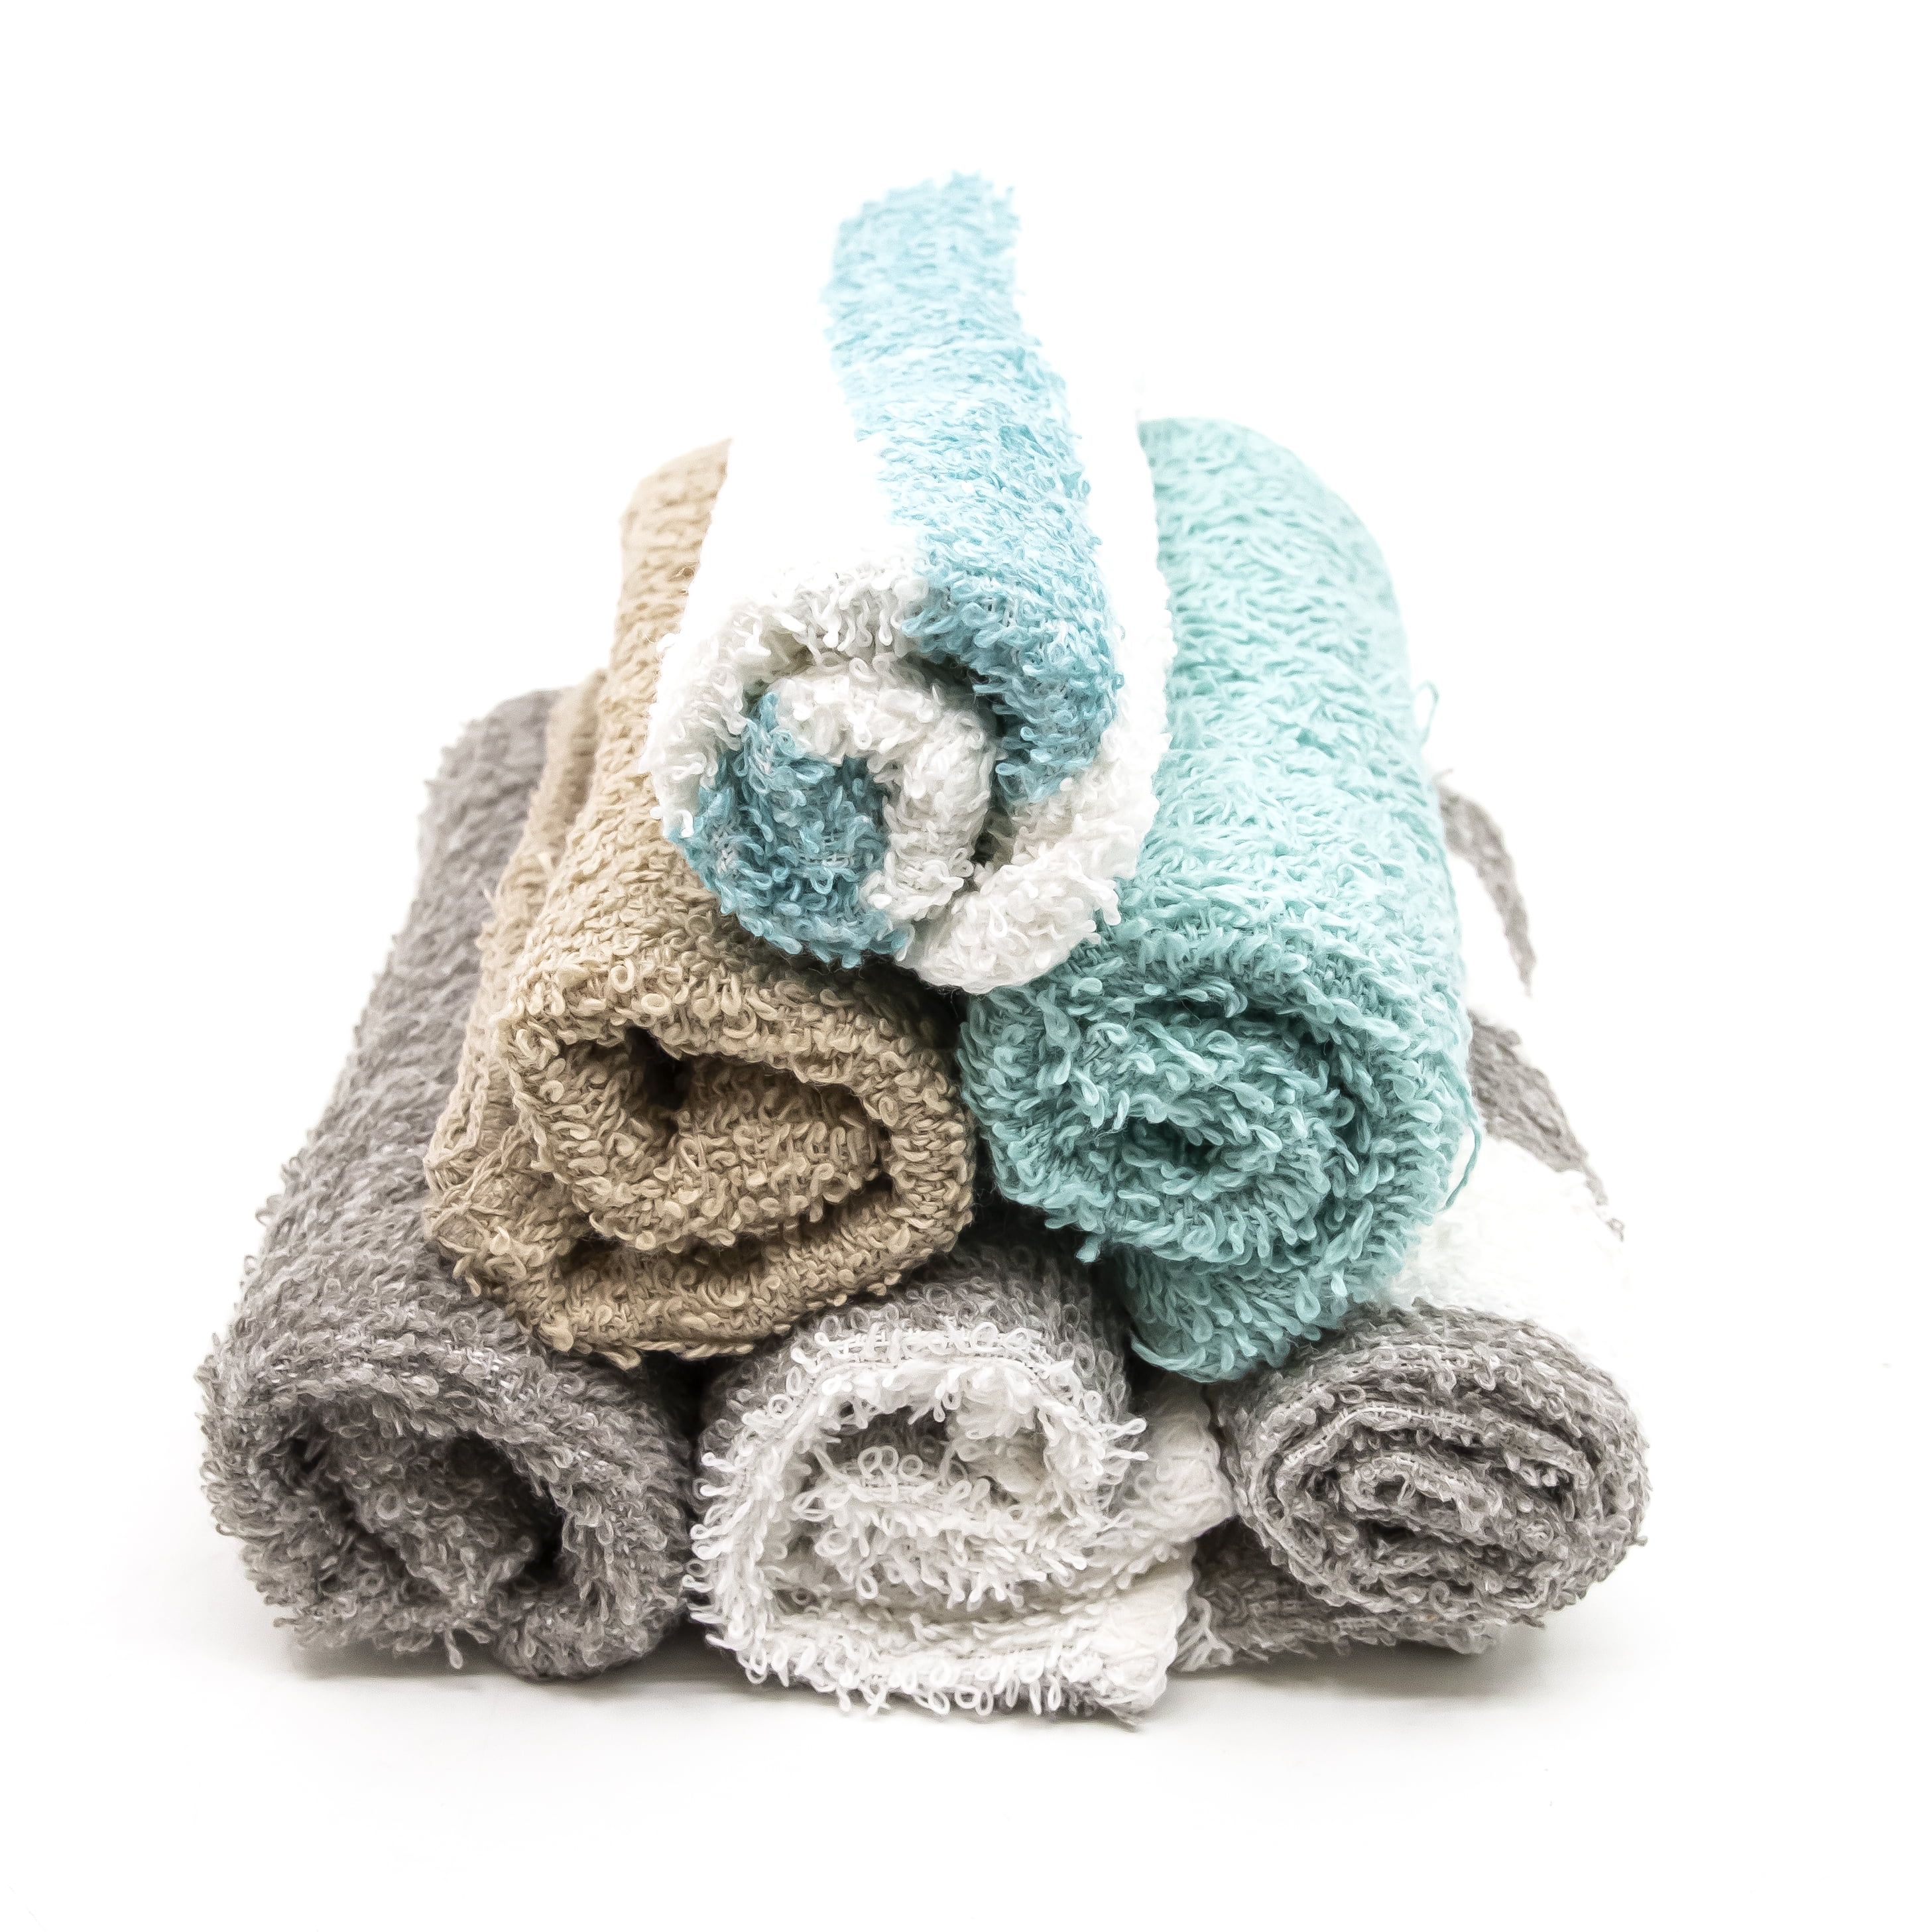 36 Pack - 12 x 12 White Cotton Ribbon Washcloths Rags - Lt Weight Thin  Cloth Rags - Bath/Exfoilating/Kitchen/Garage - 1 lb per Dozen 